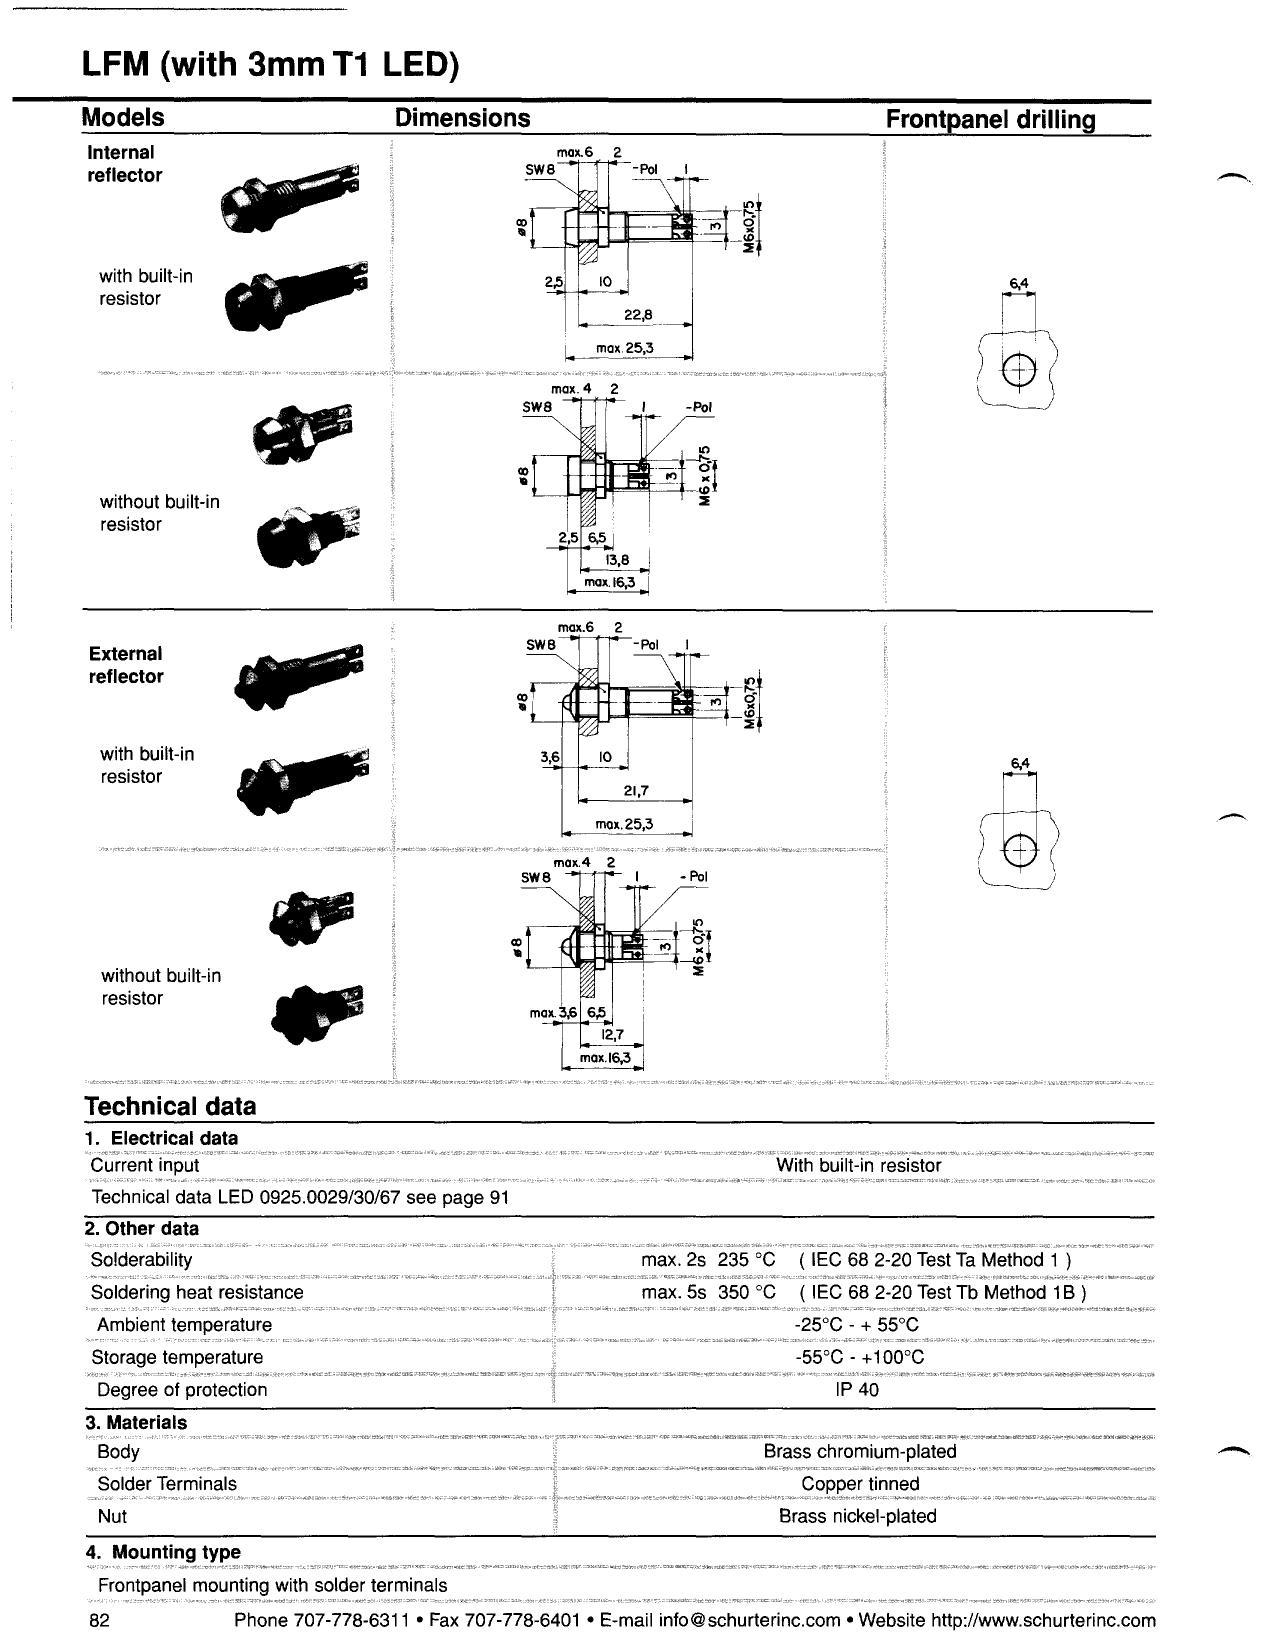 lfm-with-3mm-t1-led-models-dimensions.pdf